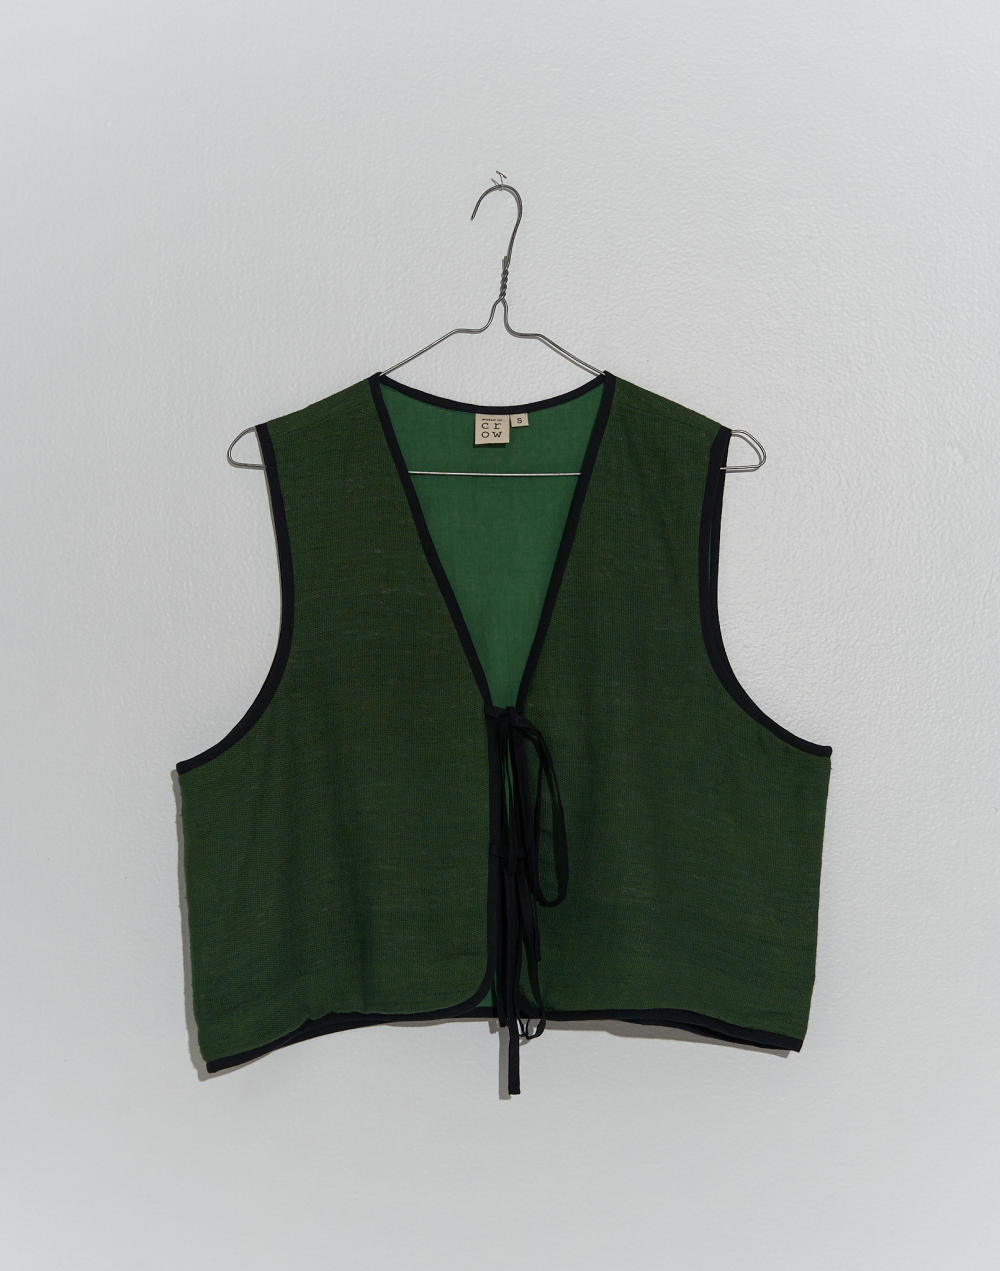 Forest green vest